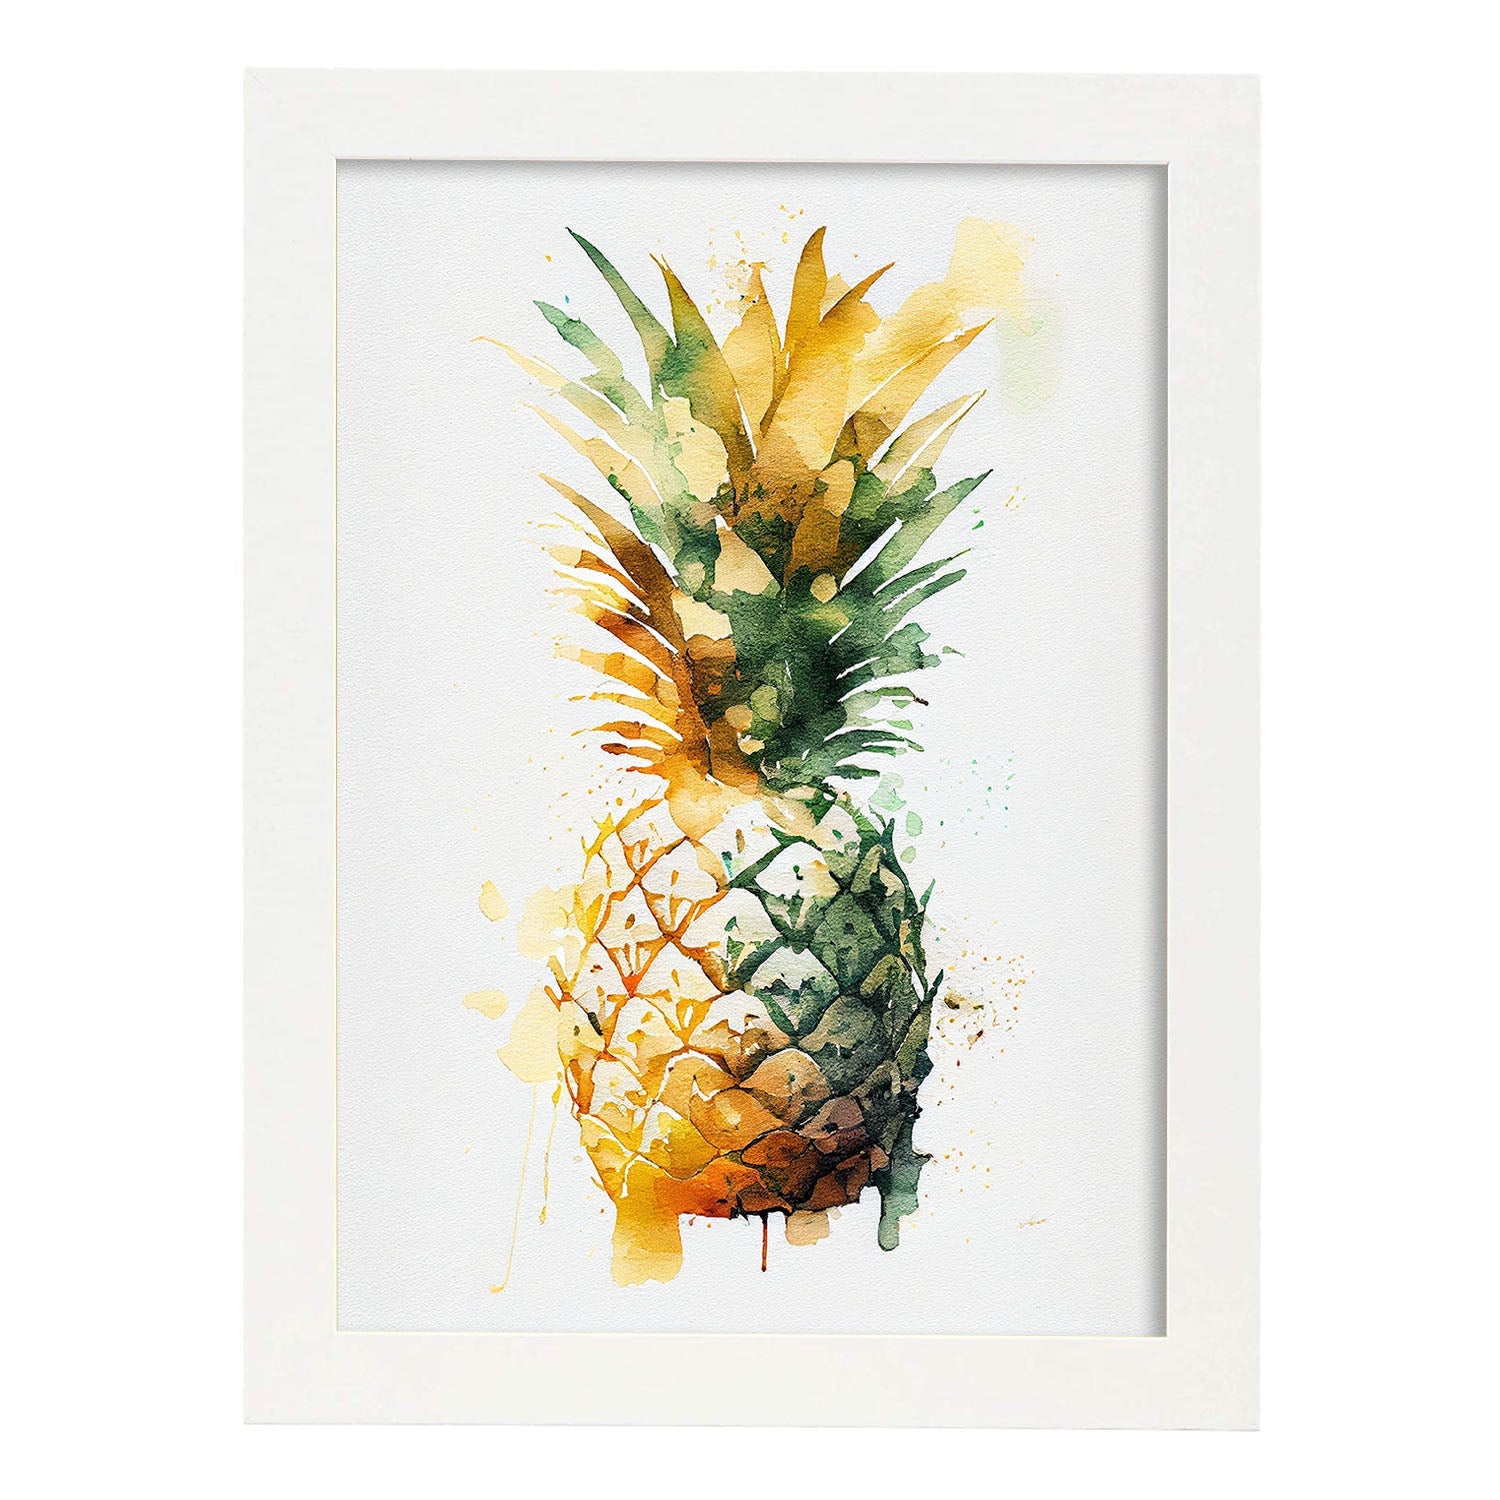 Nacnic minimalist Pineapple_2. Aesthetic Wall Art Prints for Bedroom or Living Room Design.-Artwork-Nacnic-A4-Marco Blanco-Nacnic Estudio SL